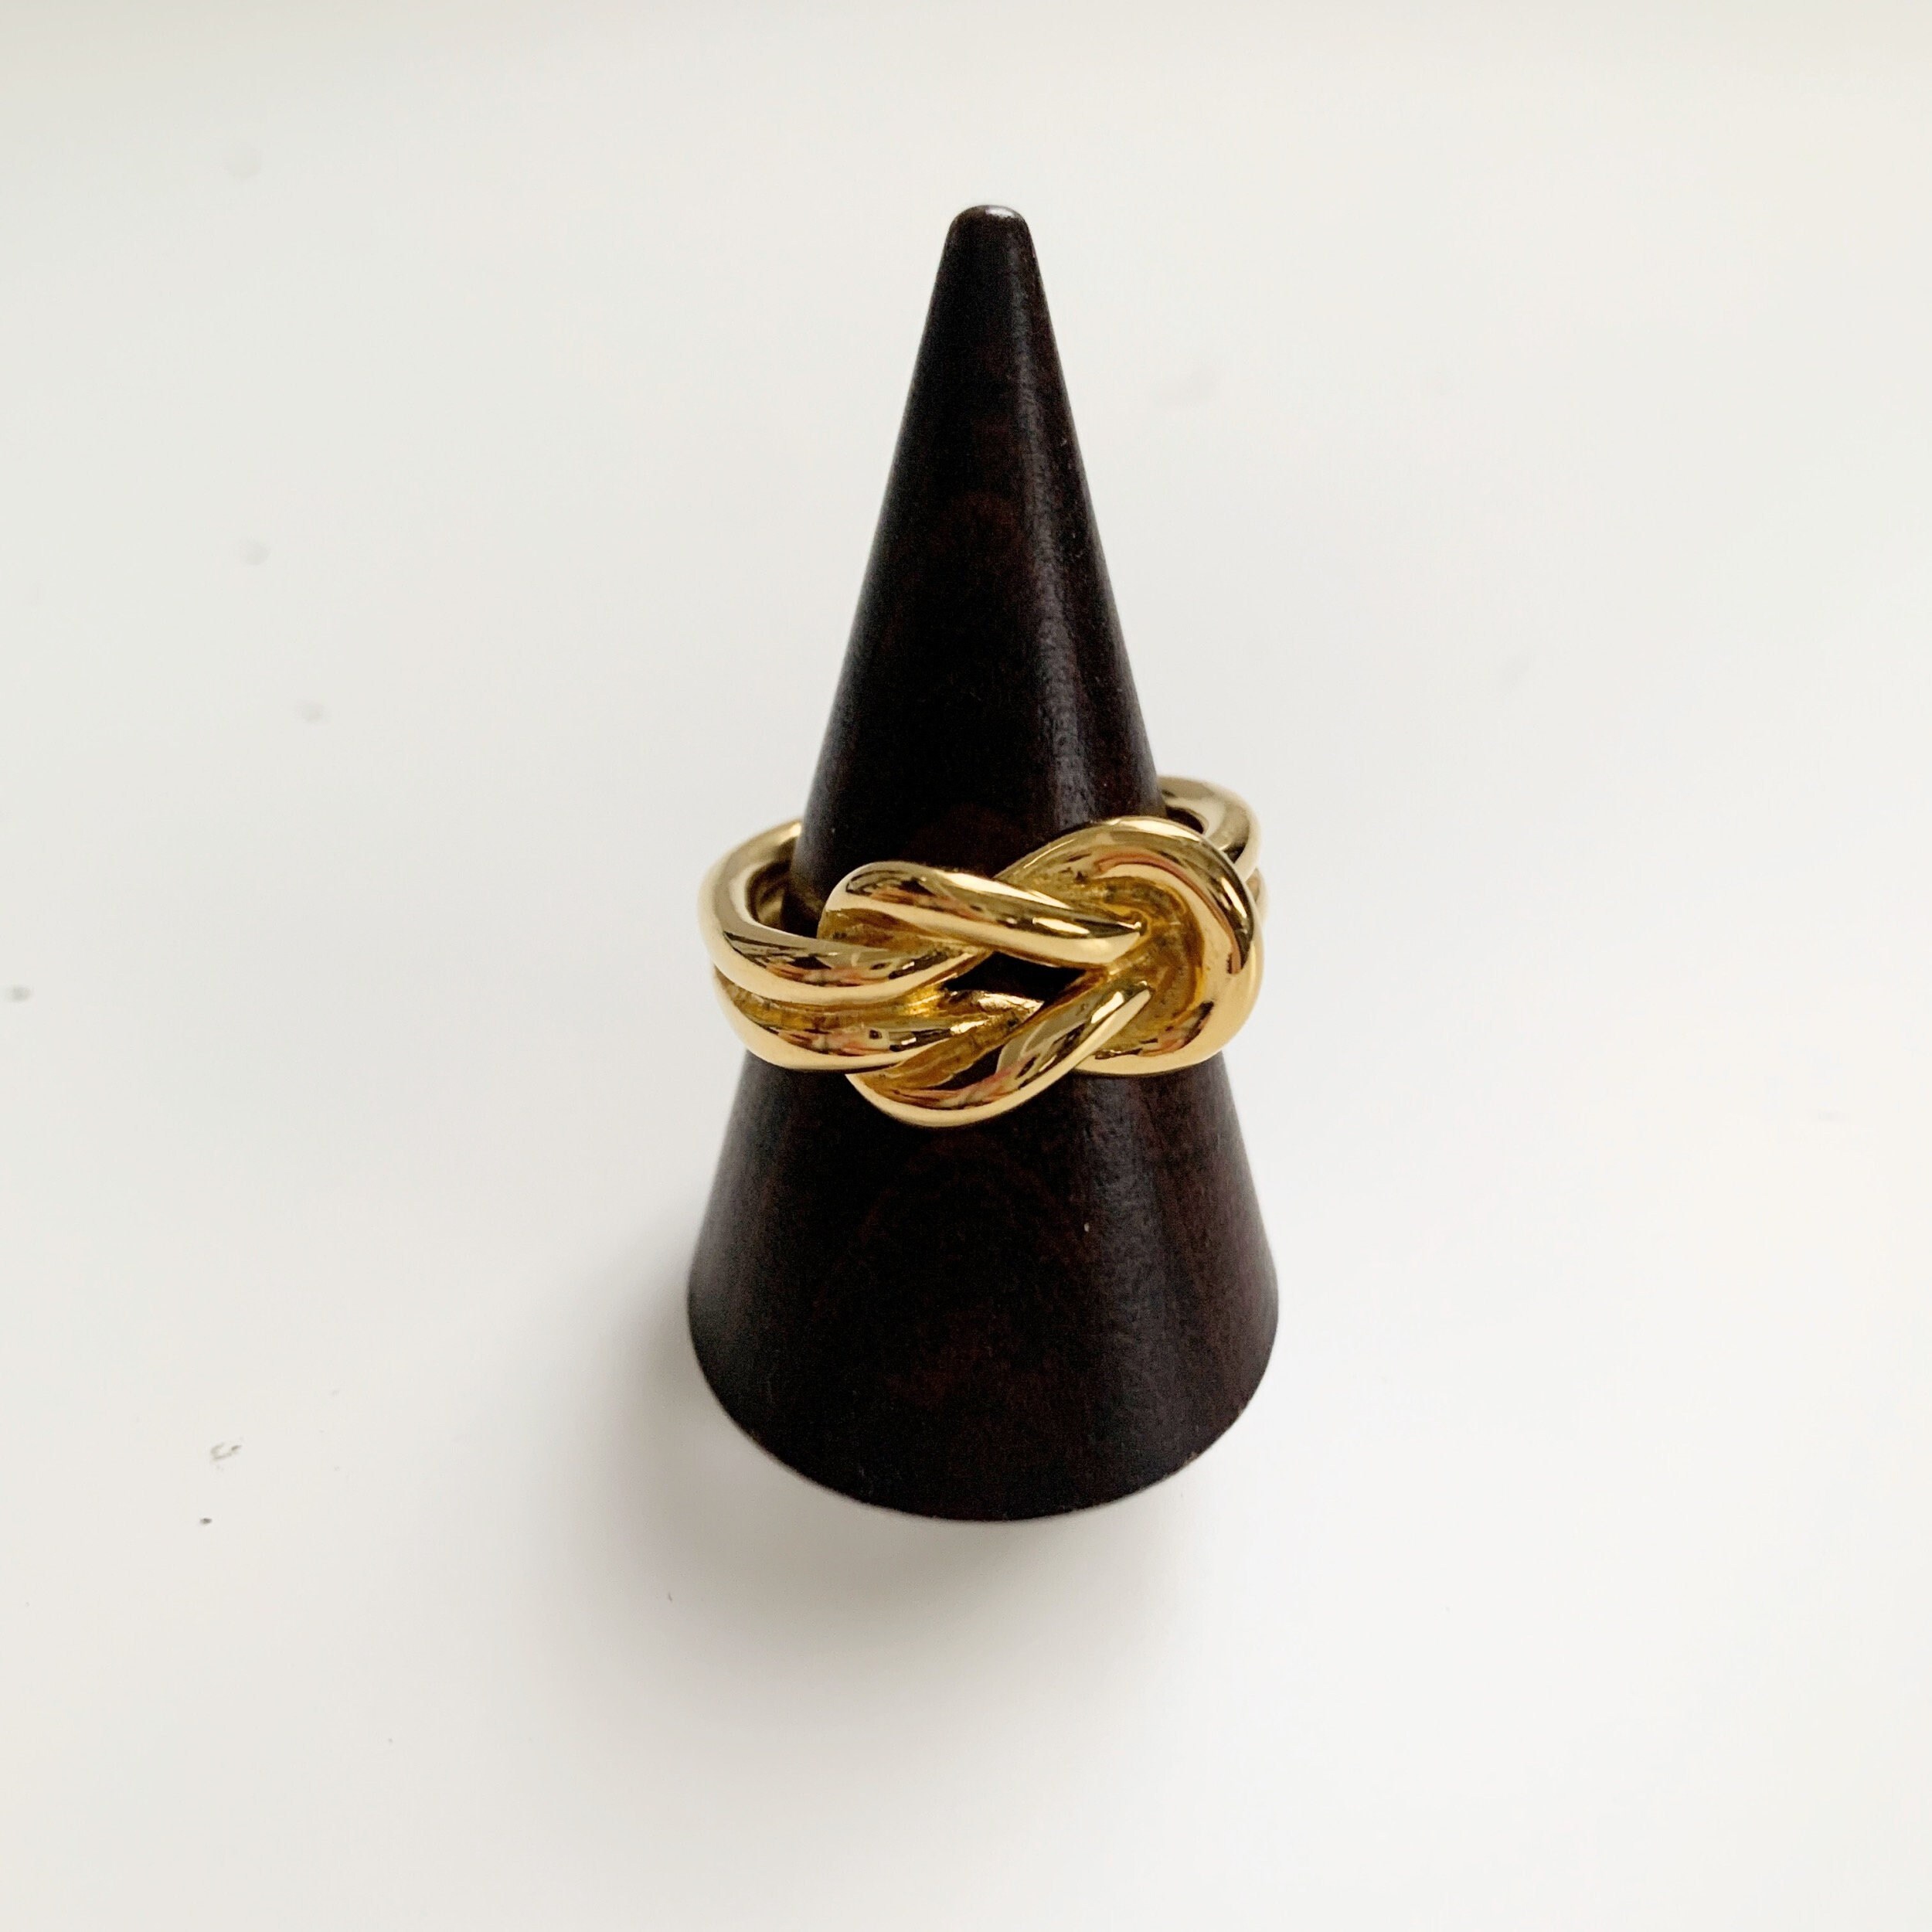 Hermès - Regate Scarf Ring - Plaqué or Rose